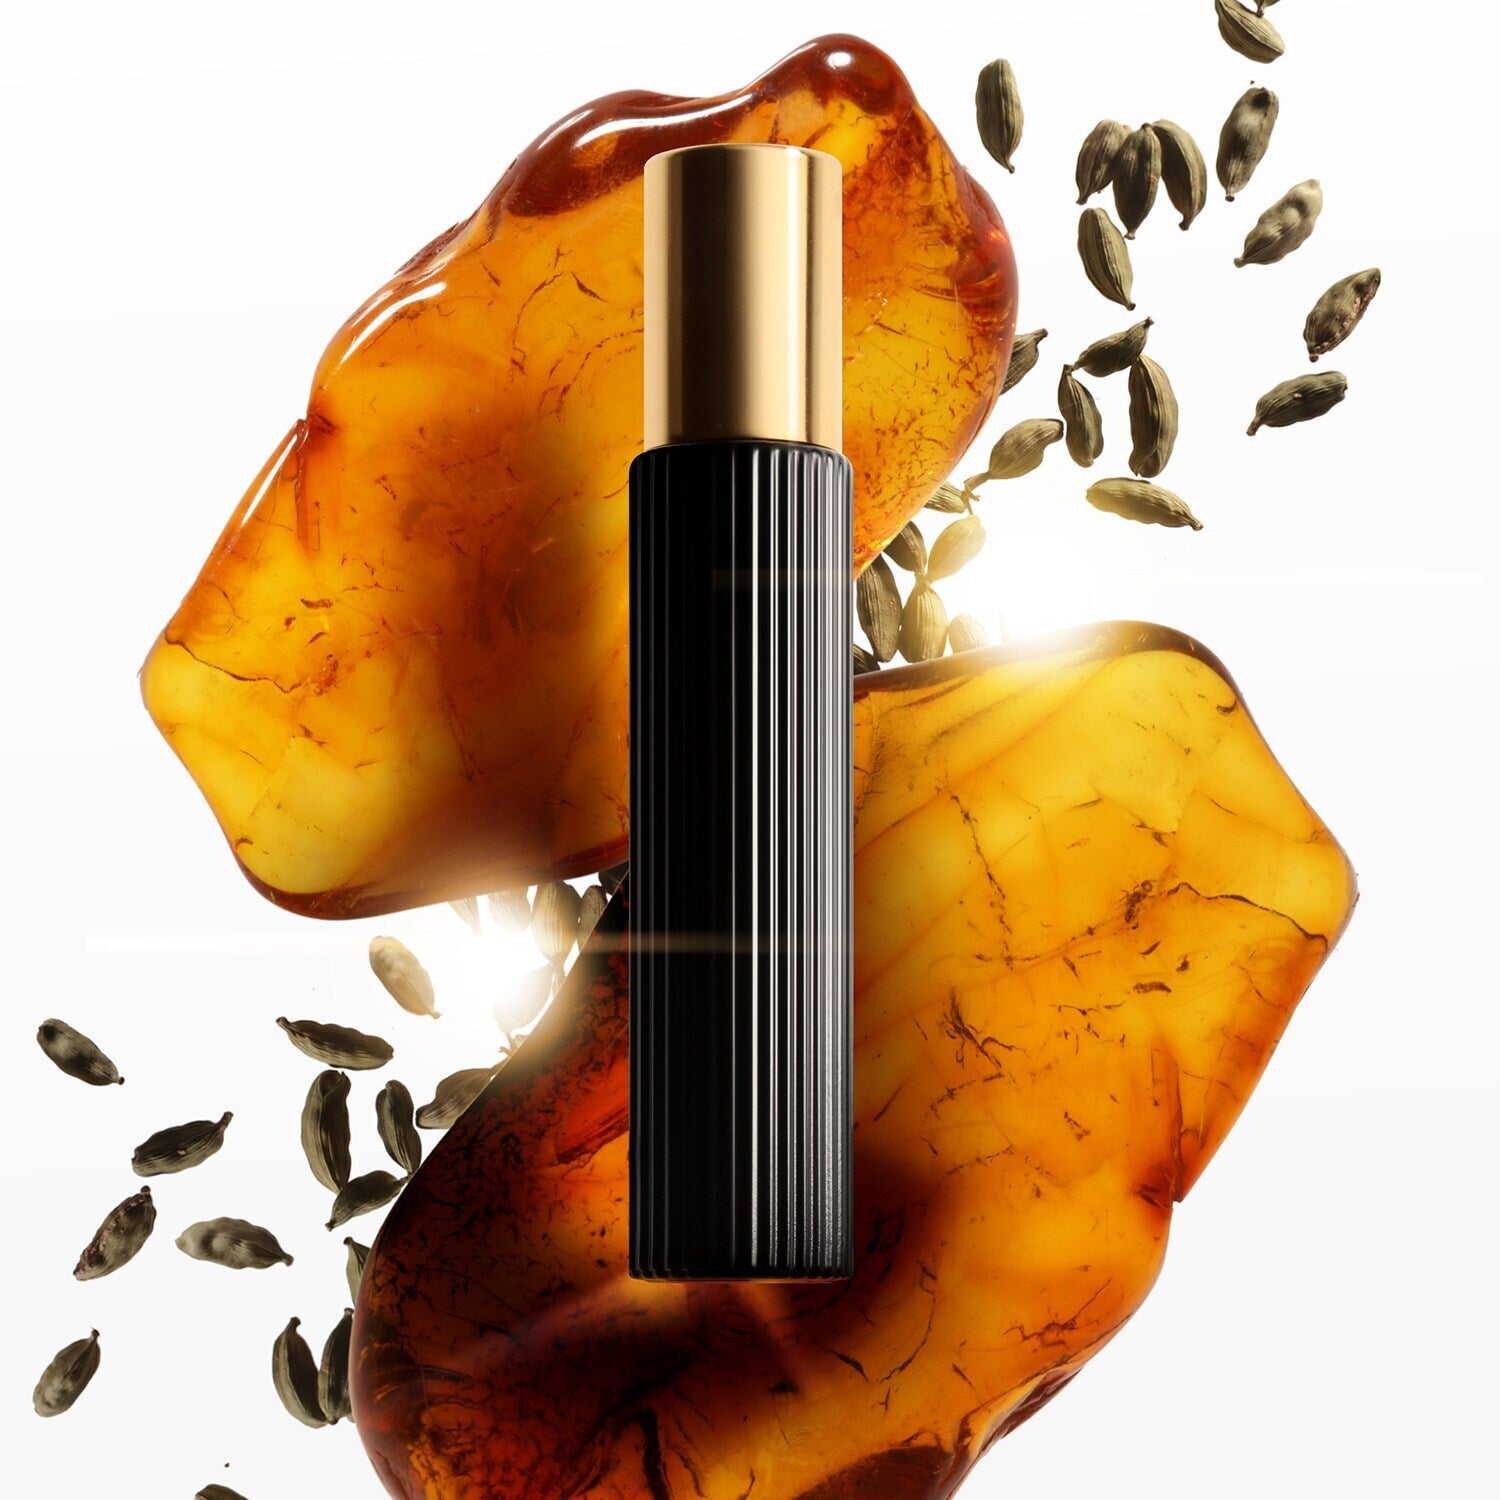 Tom Ford Noir Extreme For Men All Over Body Spray | My Perfume Shop Australia